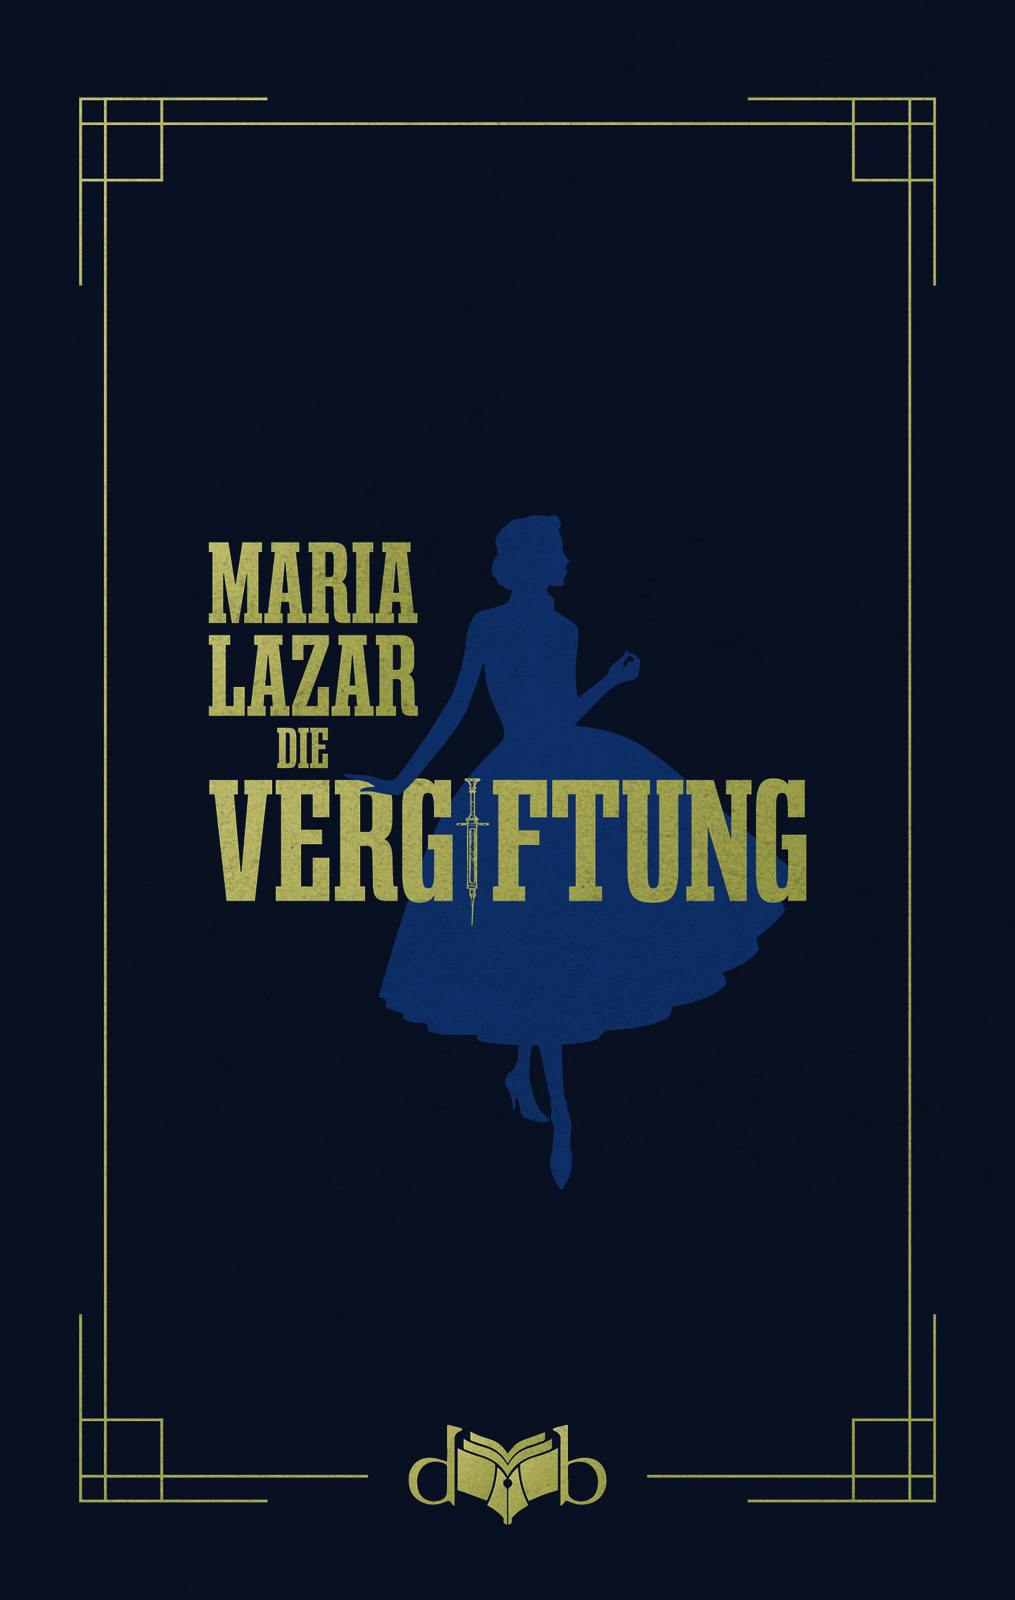 2023, Maria Lazar, Die Vergiftung, DVB Verlag 2014,